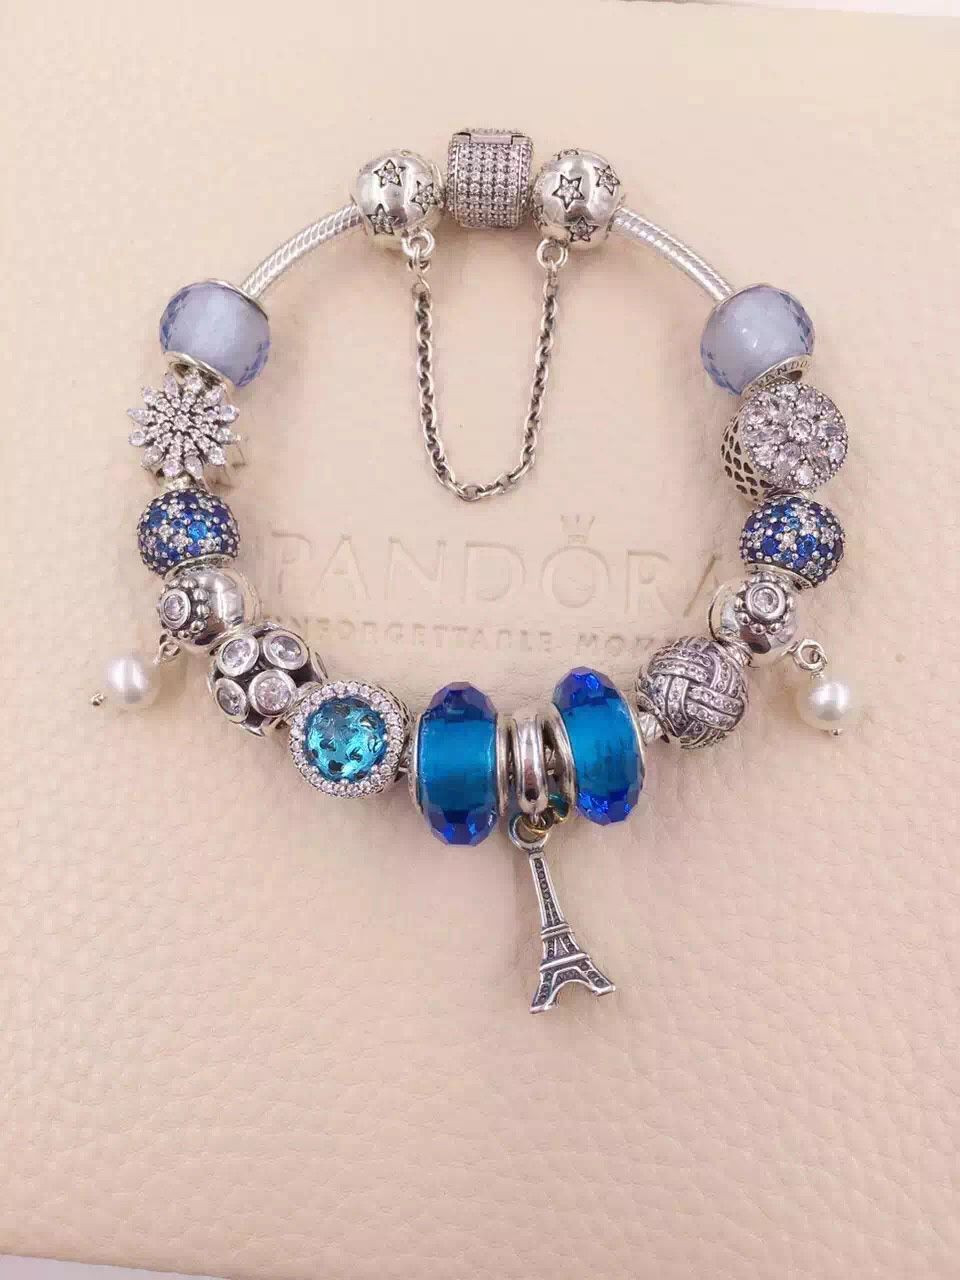 Pandora Bracelet Ideas
 OFF $339 Pandora Charm Bracelet Blue Hot Sale